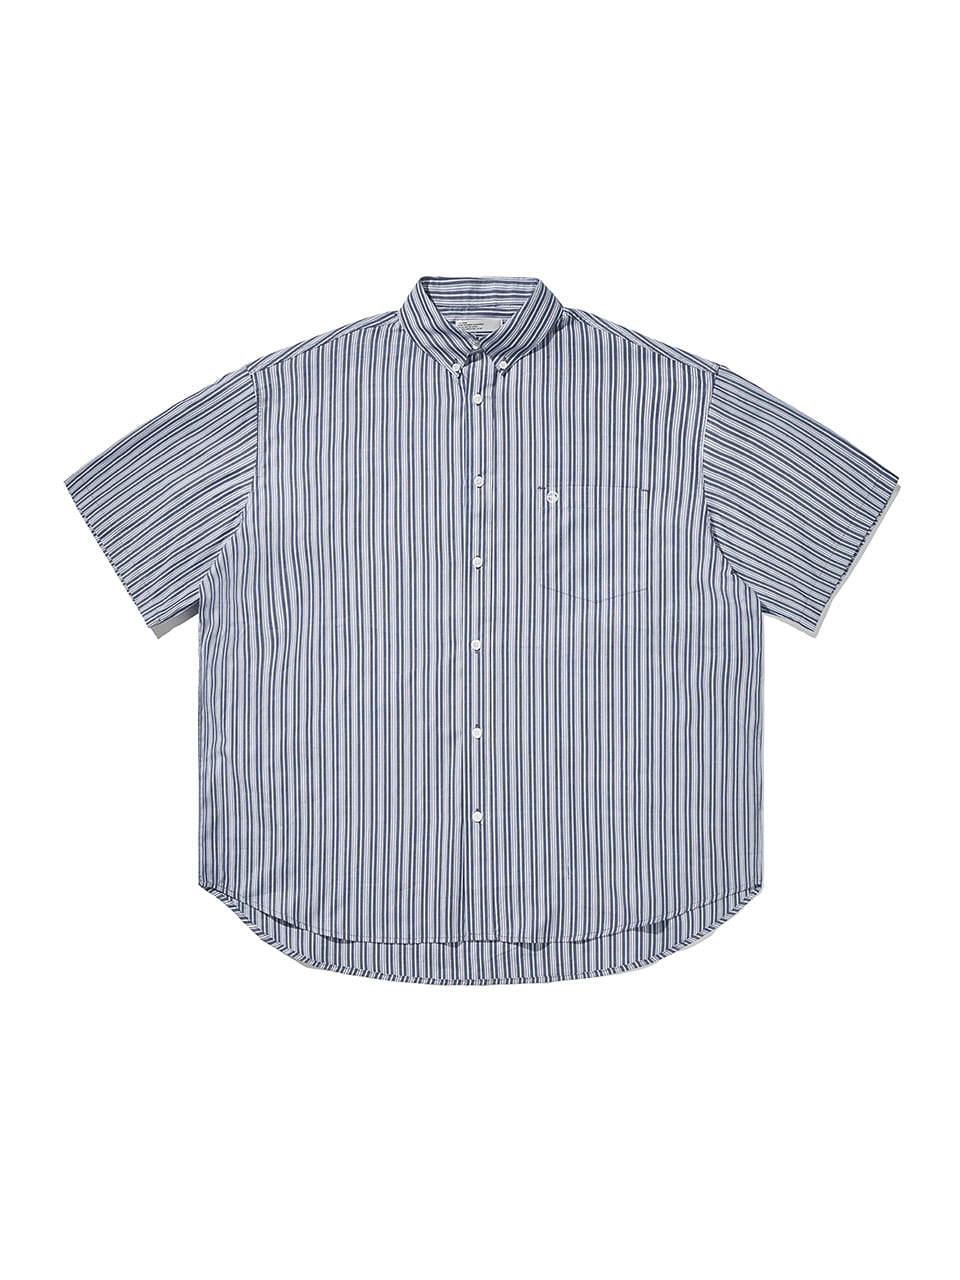 SOUNDSLIFE - [Japan Fabric] Back Loop Short Sleeve Stripe Shirt Navy